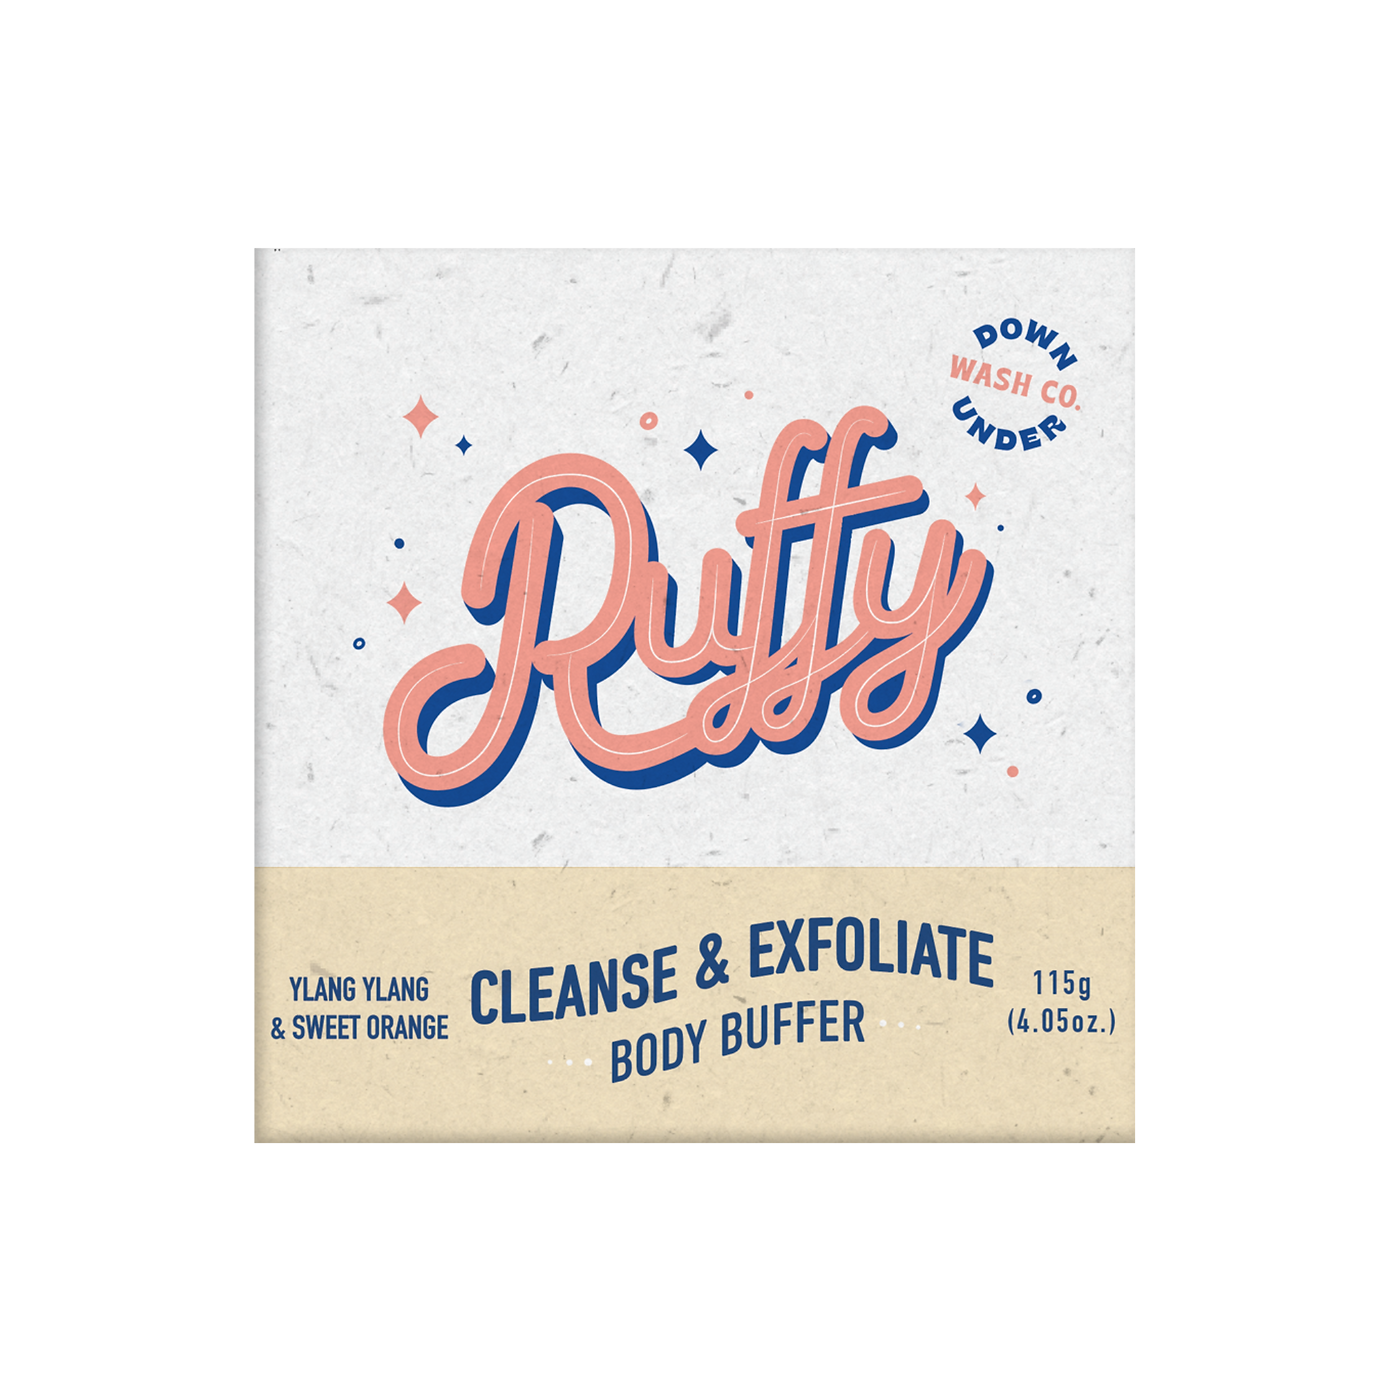 Downunder Wash Co Ruffy Cleanse & Exfoliate (Body Buffer) 115g, Ylang Ylang & Sweet Orange